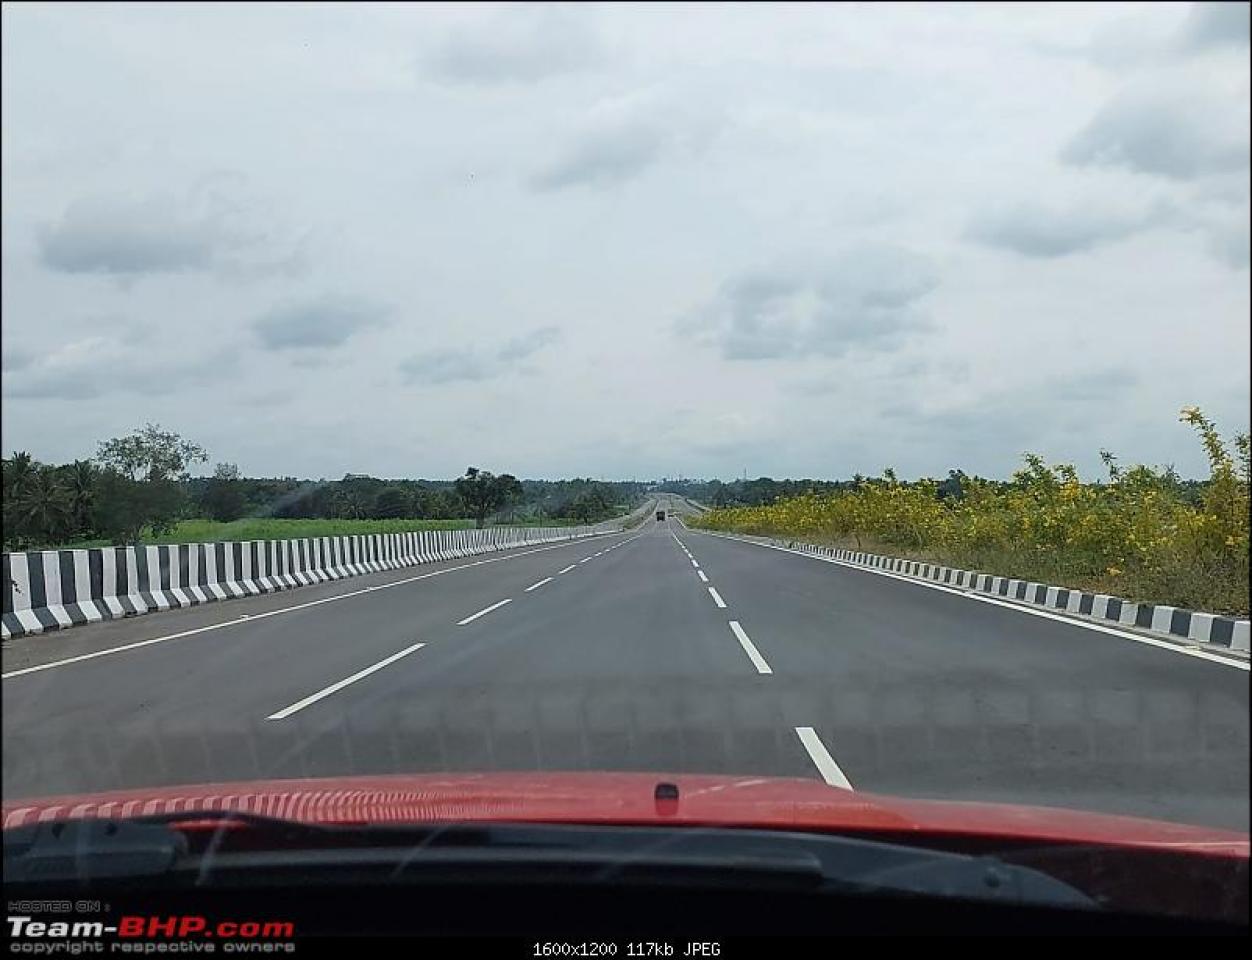 More ring roads! | /India/Bangalore/things